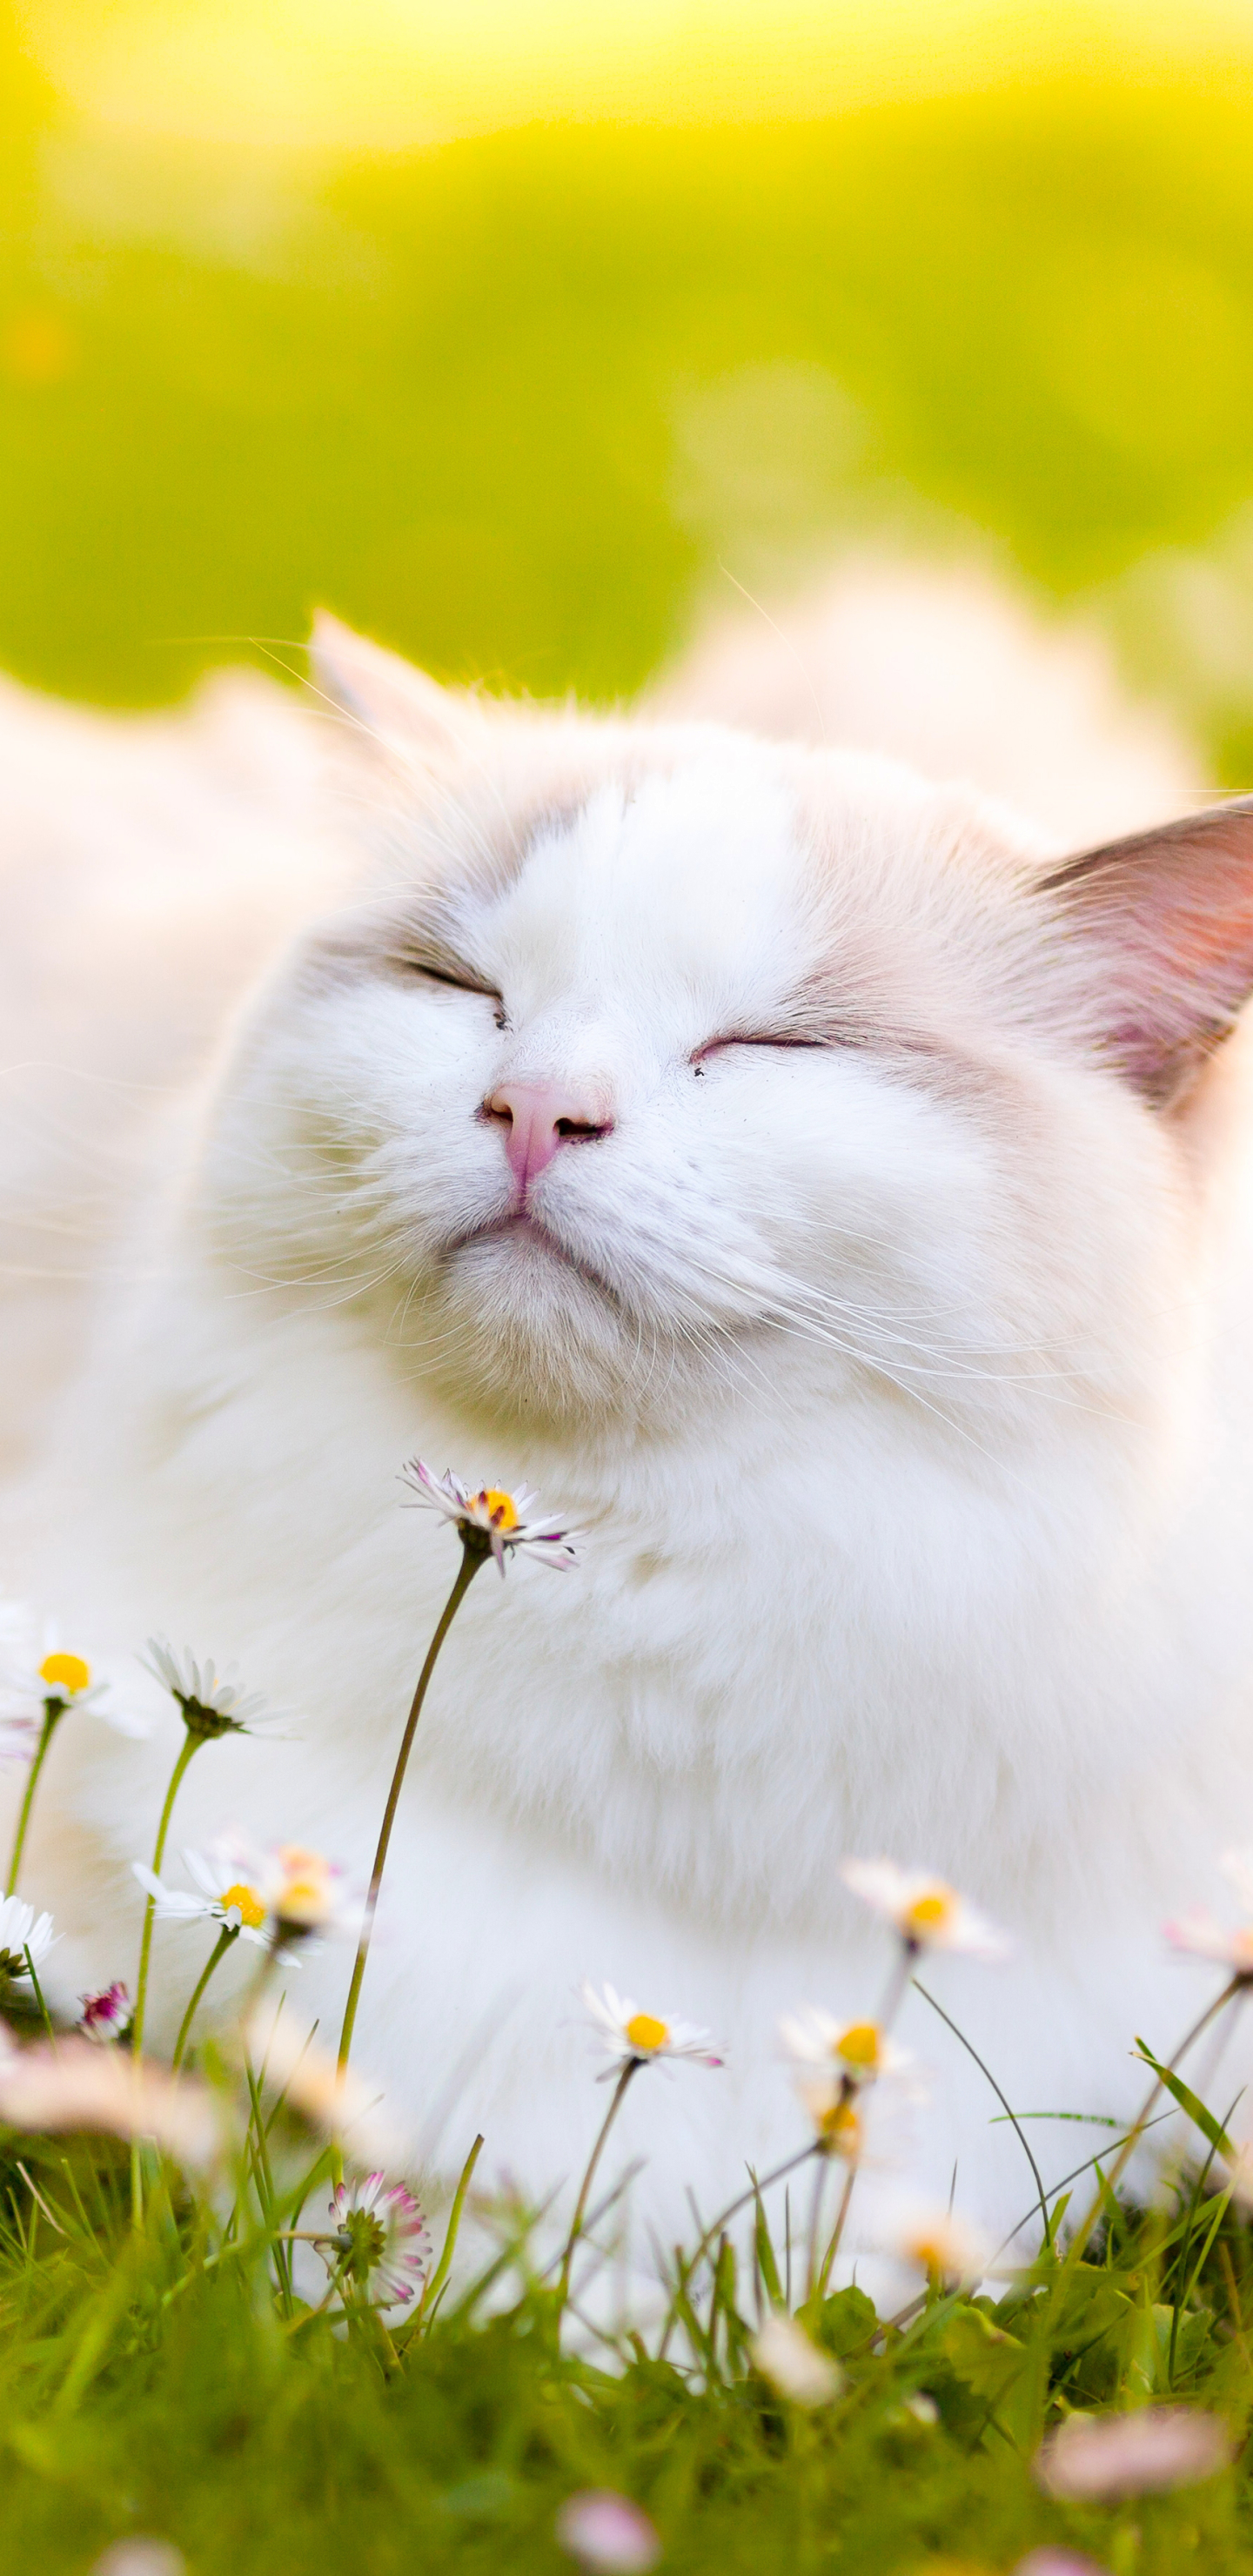 1137116 descargar imagen animales, gato, flor, difuminar, difuminado, gatos: fondos de pantalla y protectores de pantalla gratis